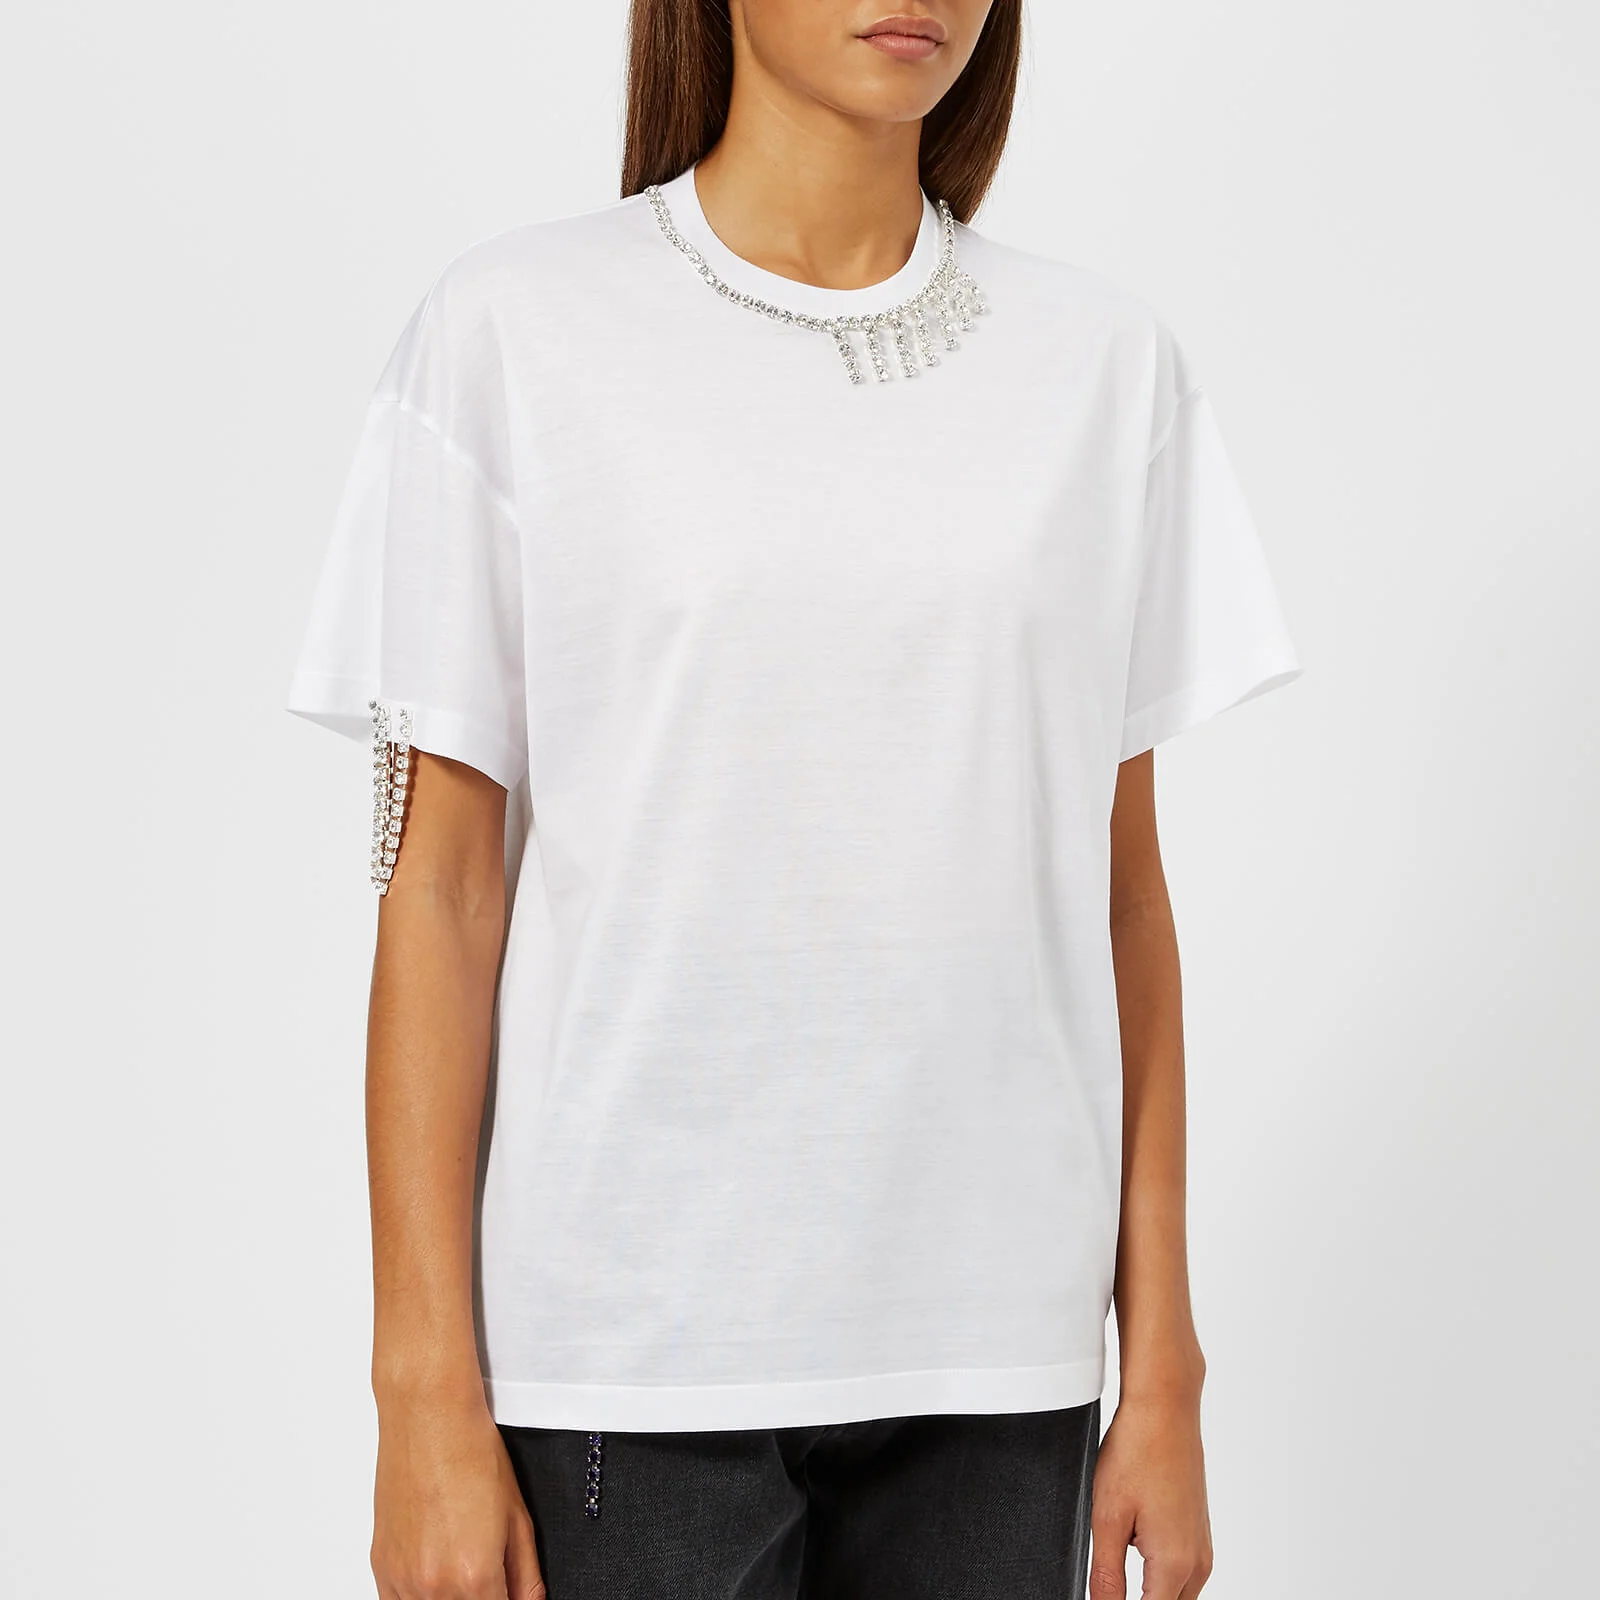 Christopher Kane Women's Crystal T-Shirt - White Image 1